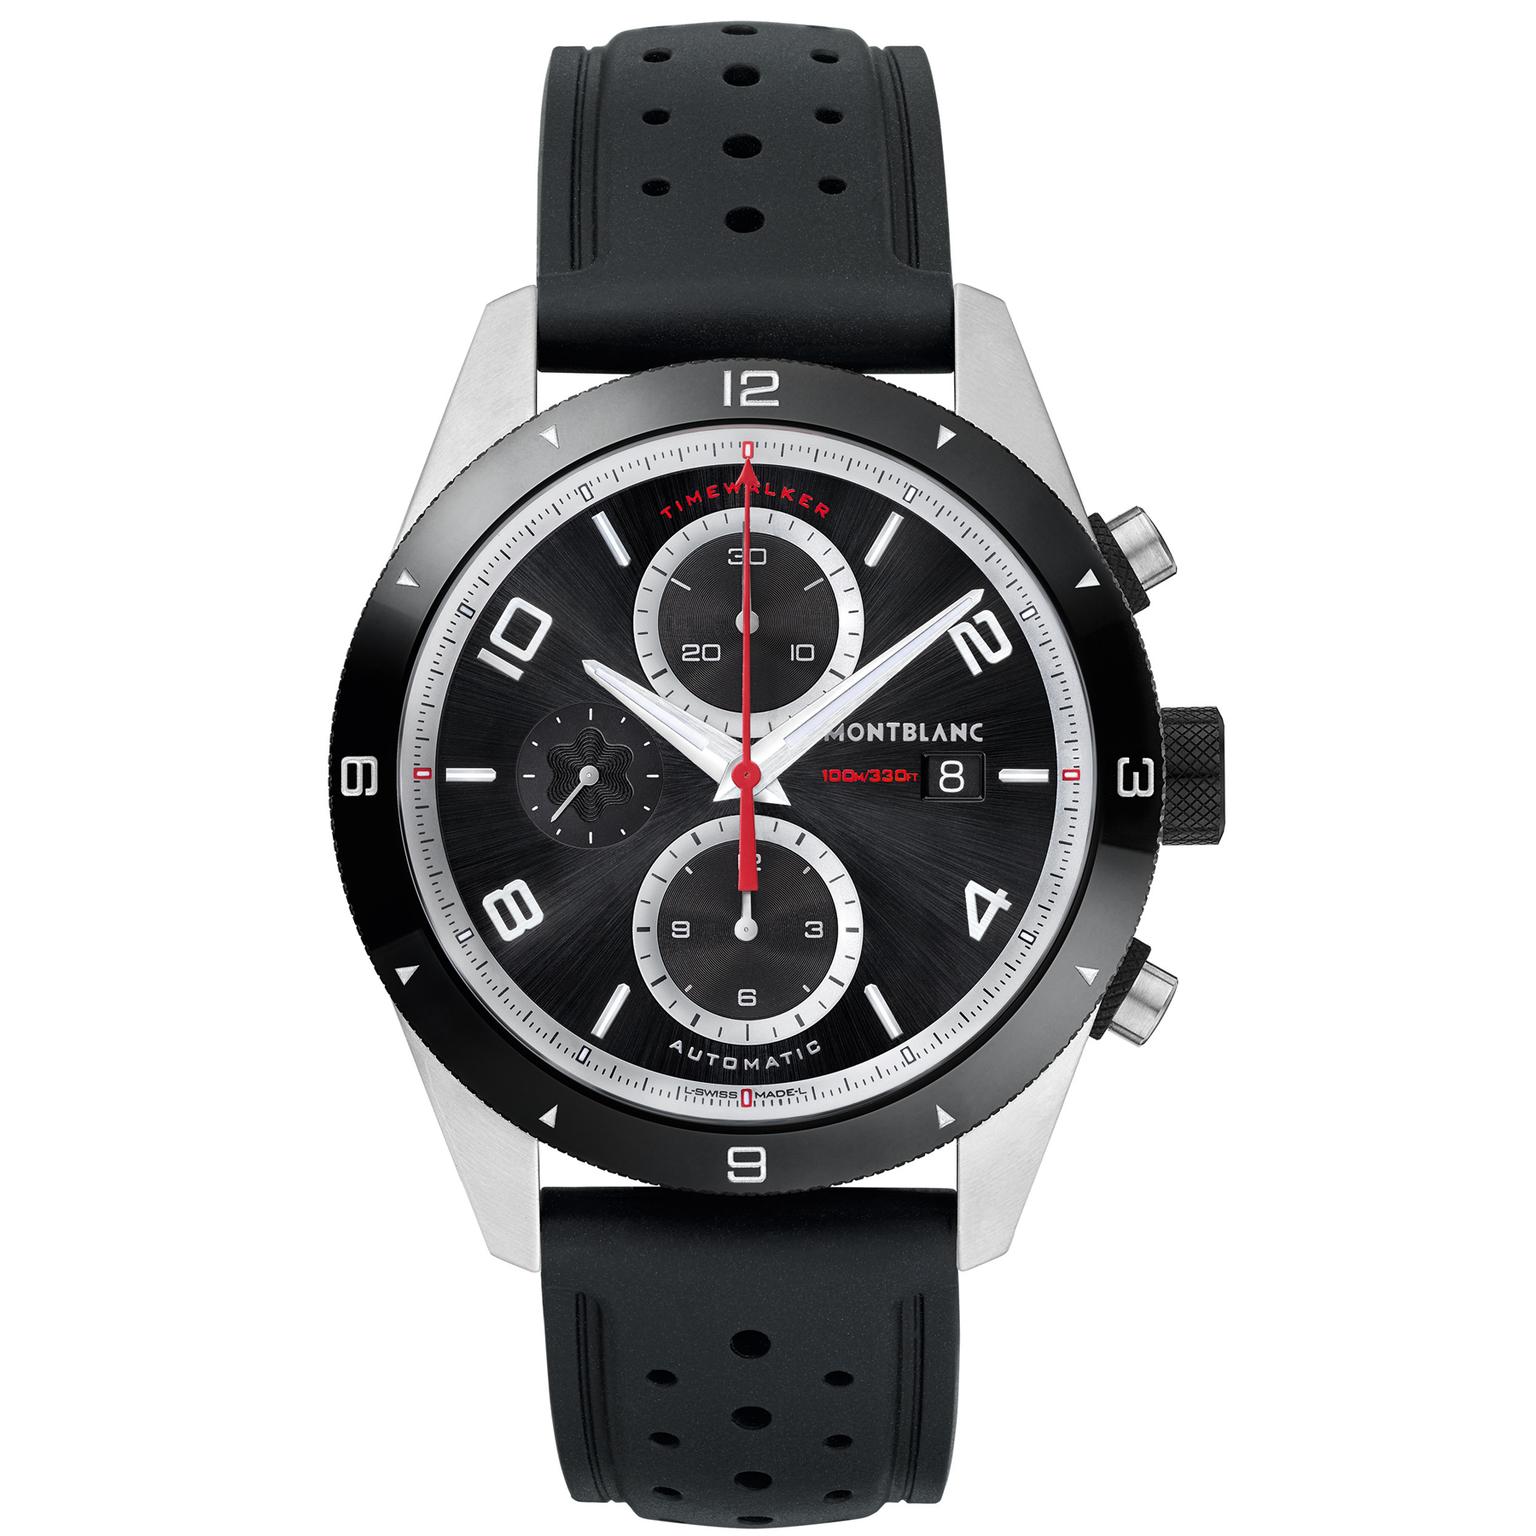 Montblanc TimeWalker Chronograph Automatic watch